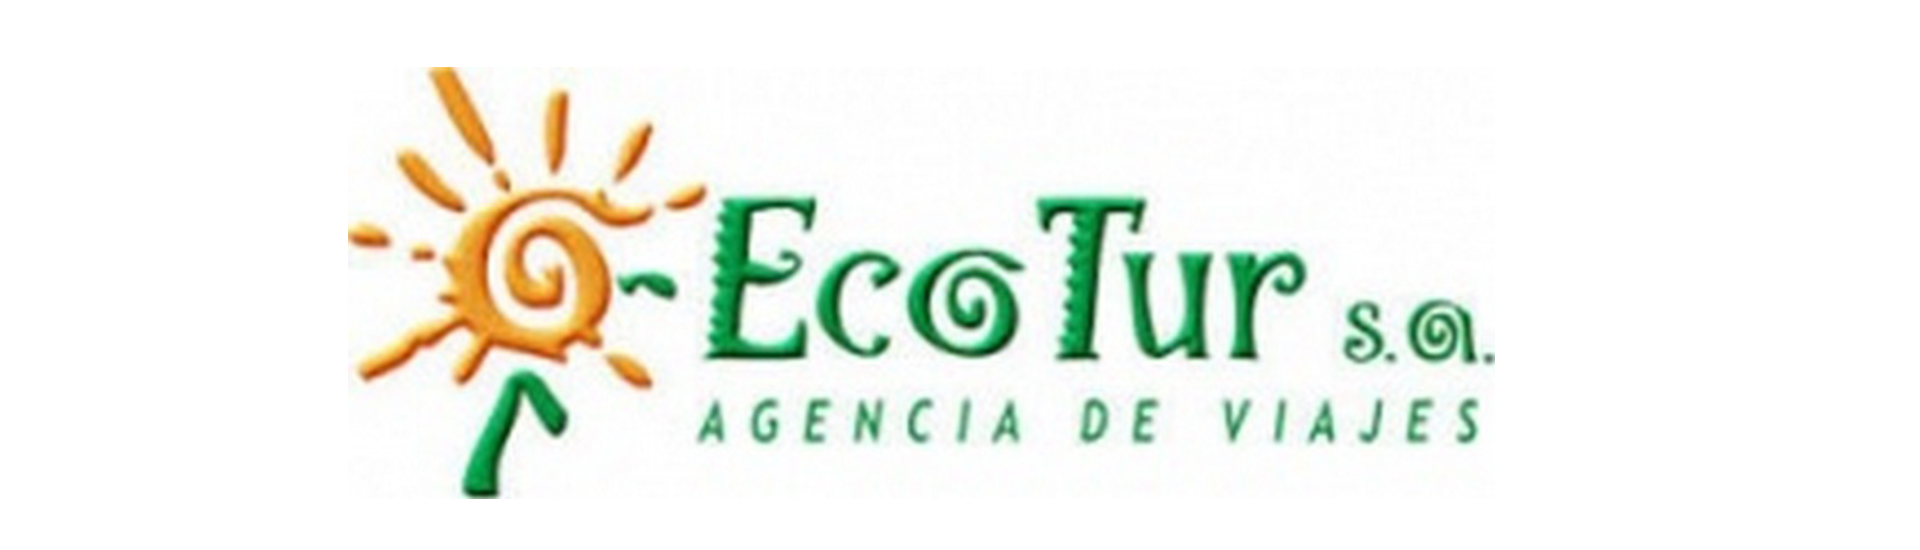 Logotipo Ecotur Cuba